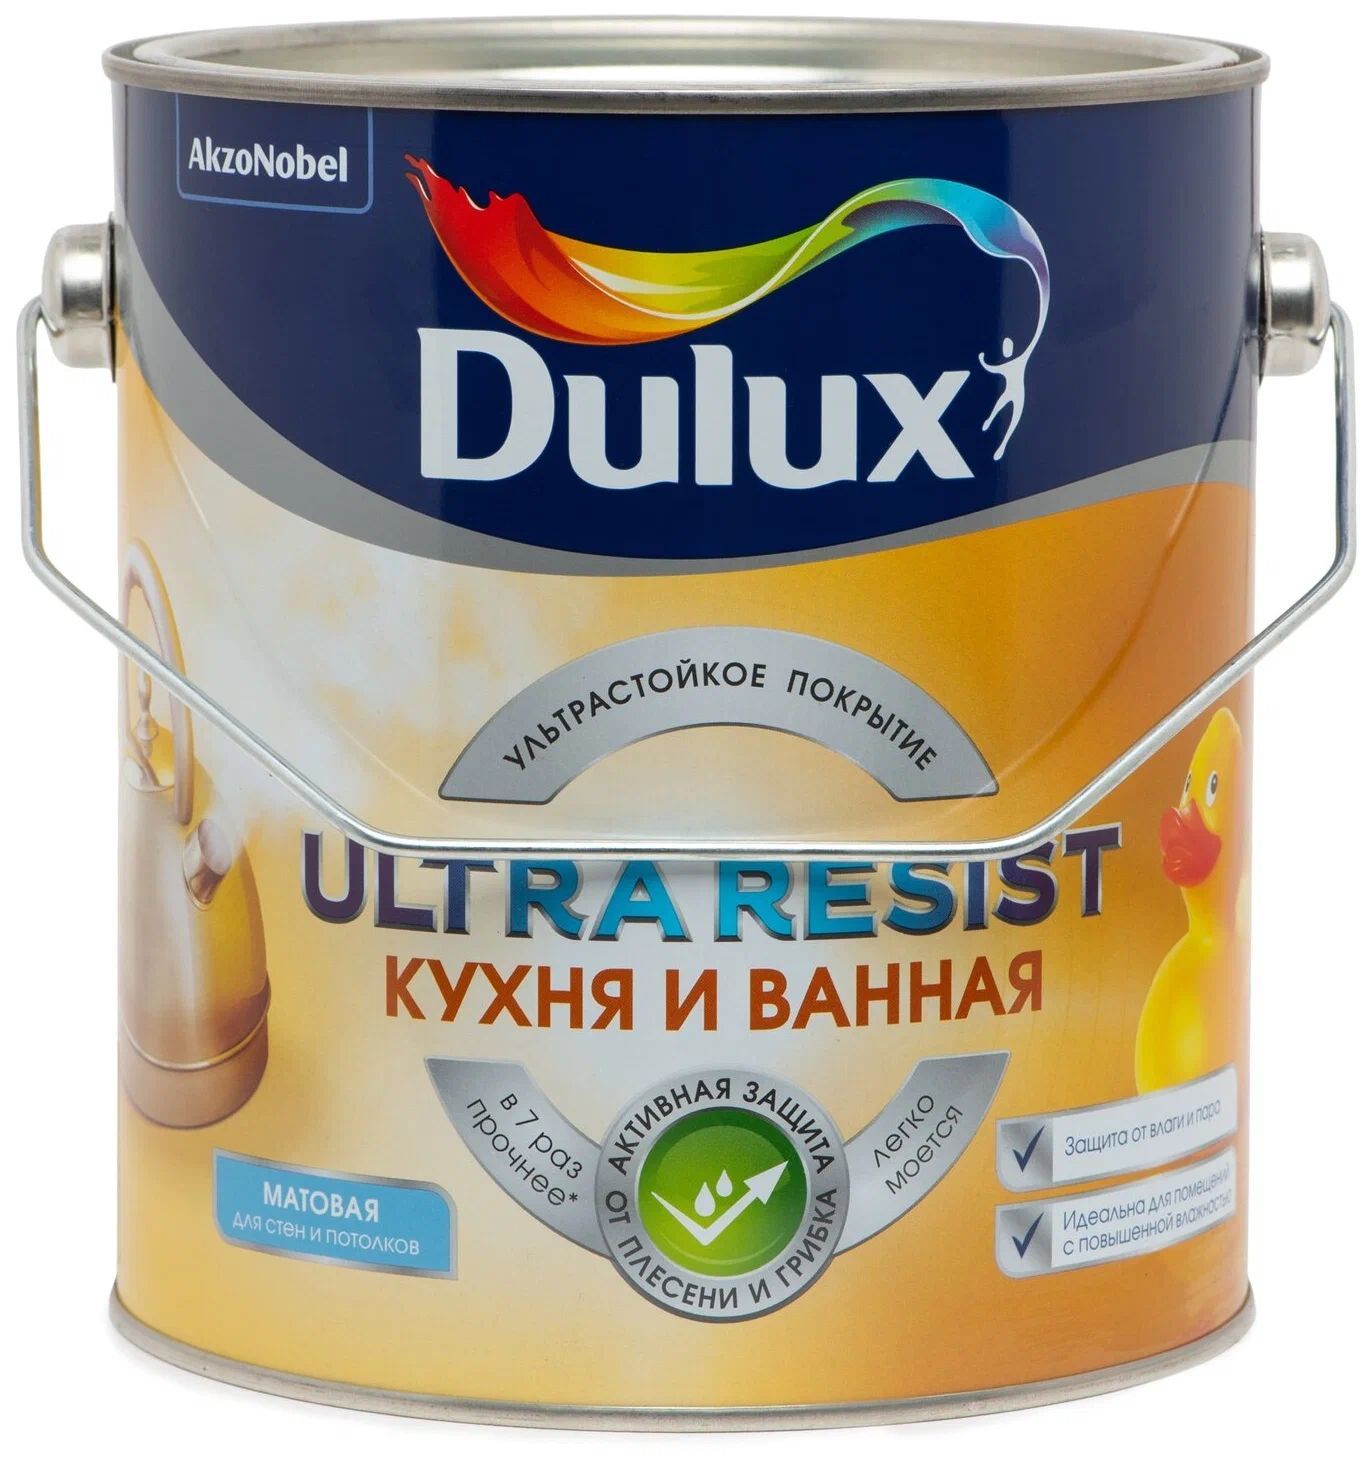 Dulux Ultra resist ванная